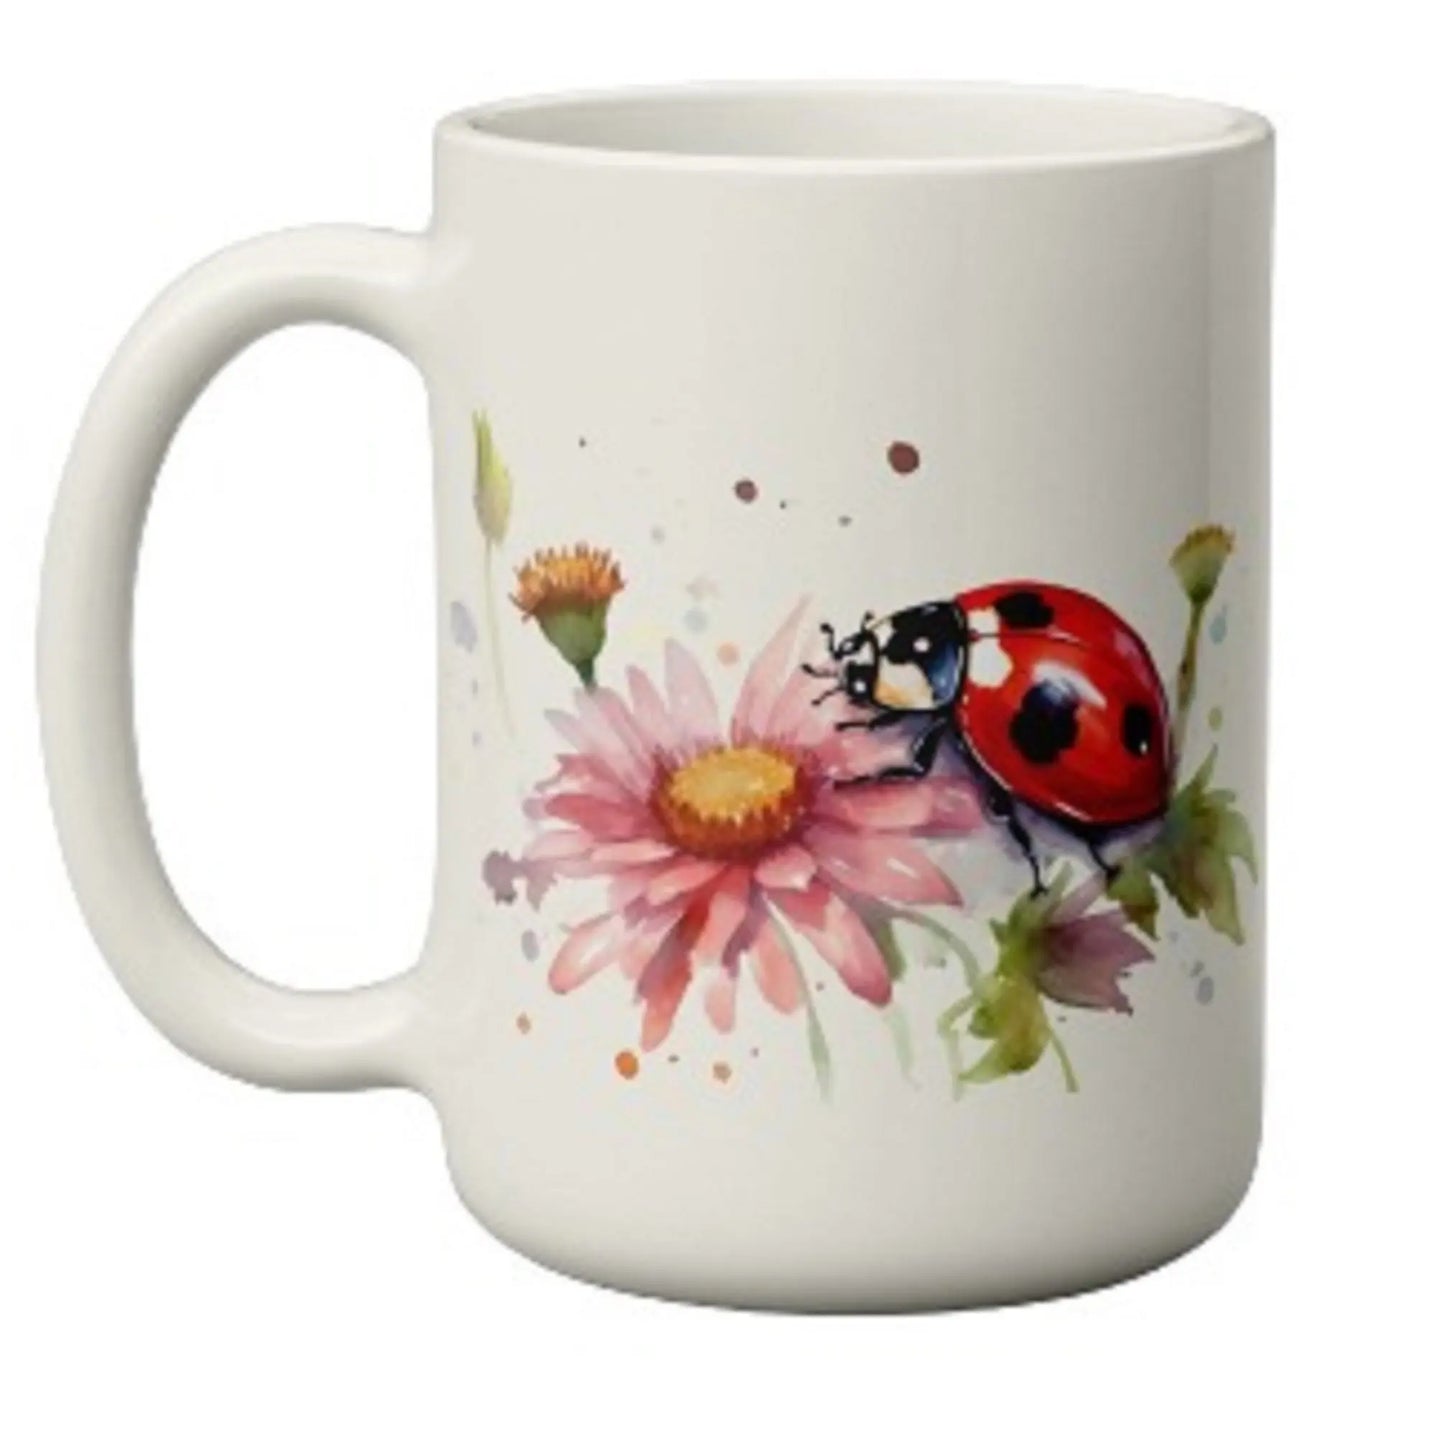  Gorgeous Ladybird on Flower Mug by Free Spirit Accessories sold by Free Spirit Accessories